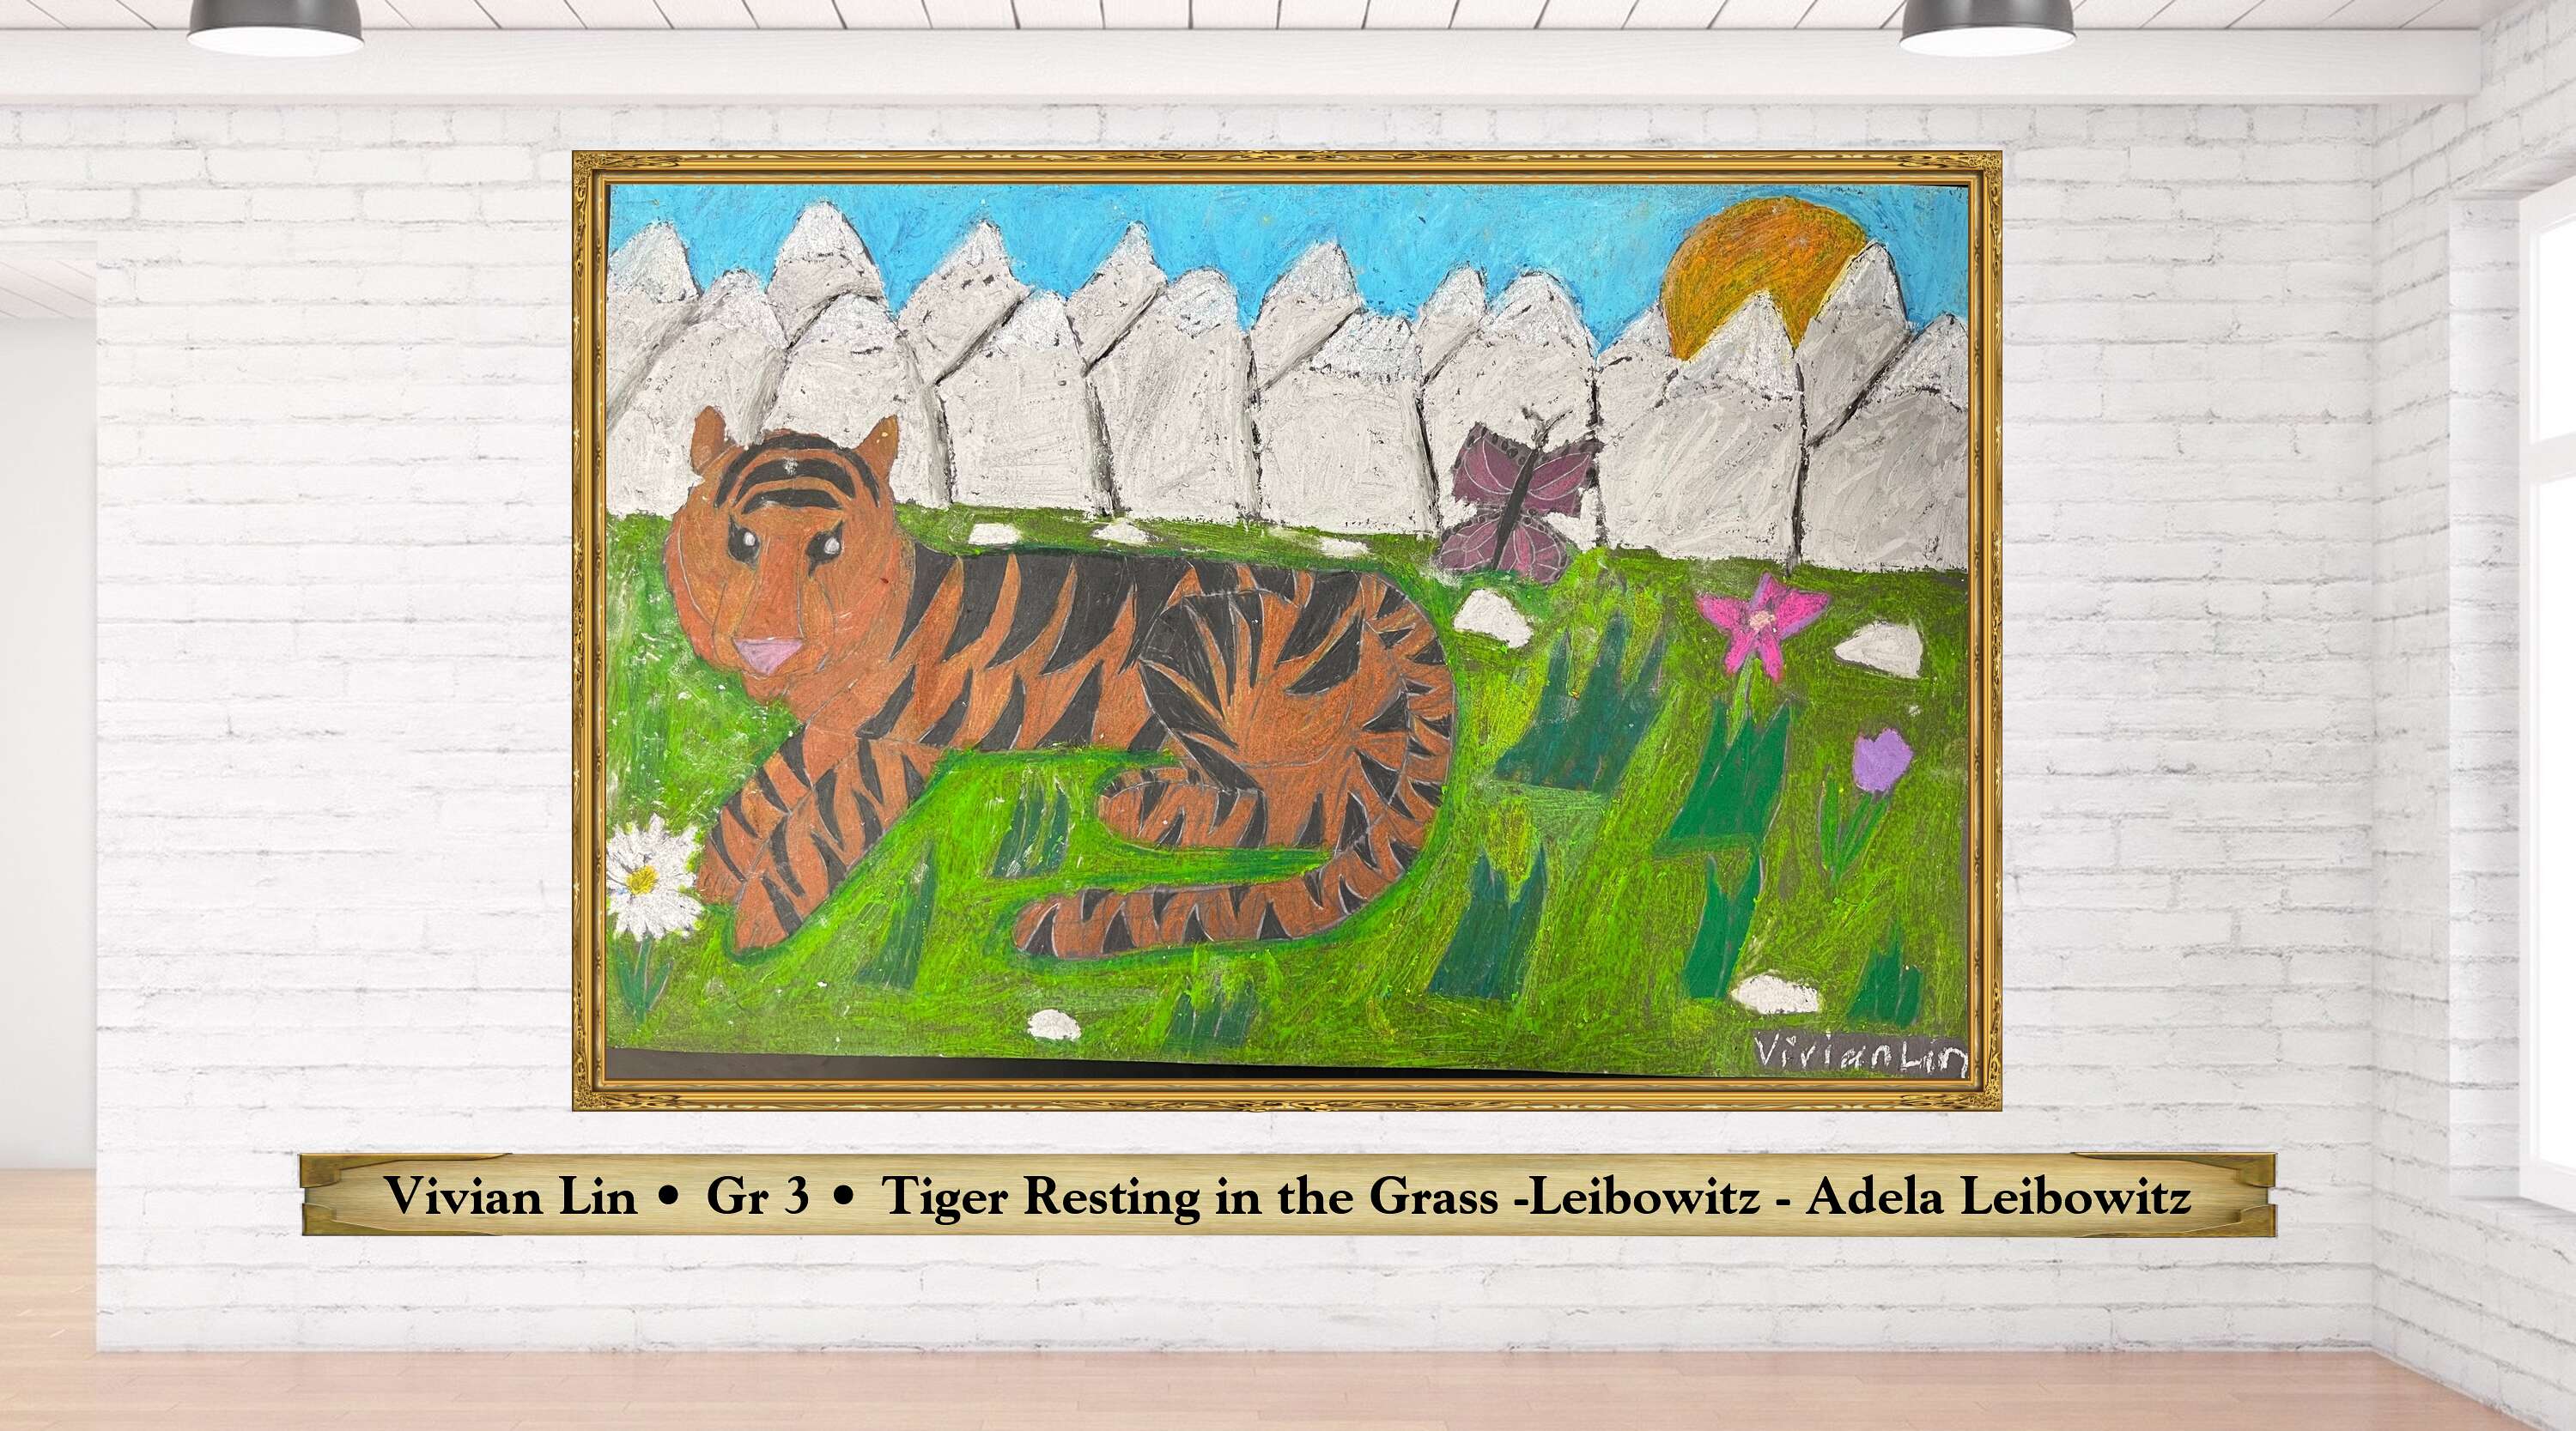 Vivian Lin • Gr 3 • Tiger Resting in the Grass -Leibowitz - Adela Leibowitz